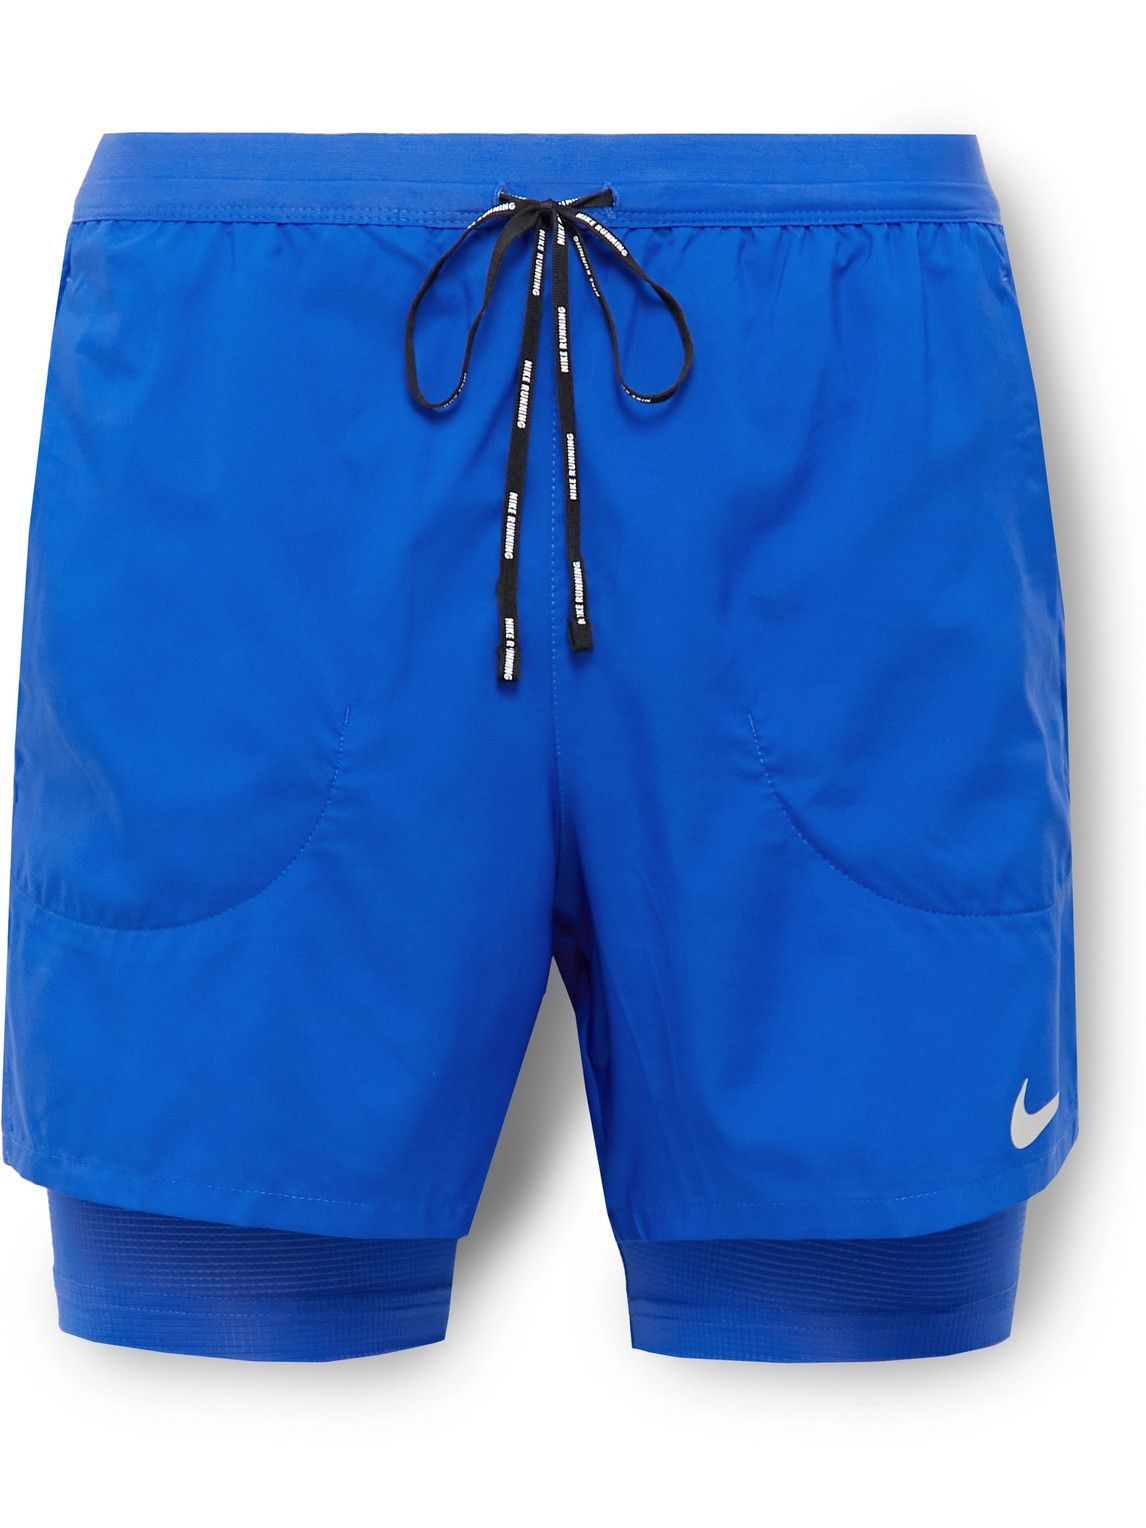 Nike Running - 2-in-1 Flex Stride Shell Shorts - Blue Nike Running